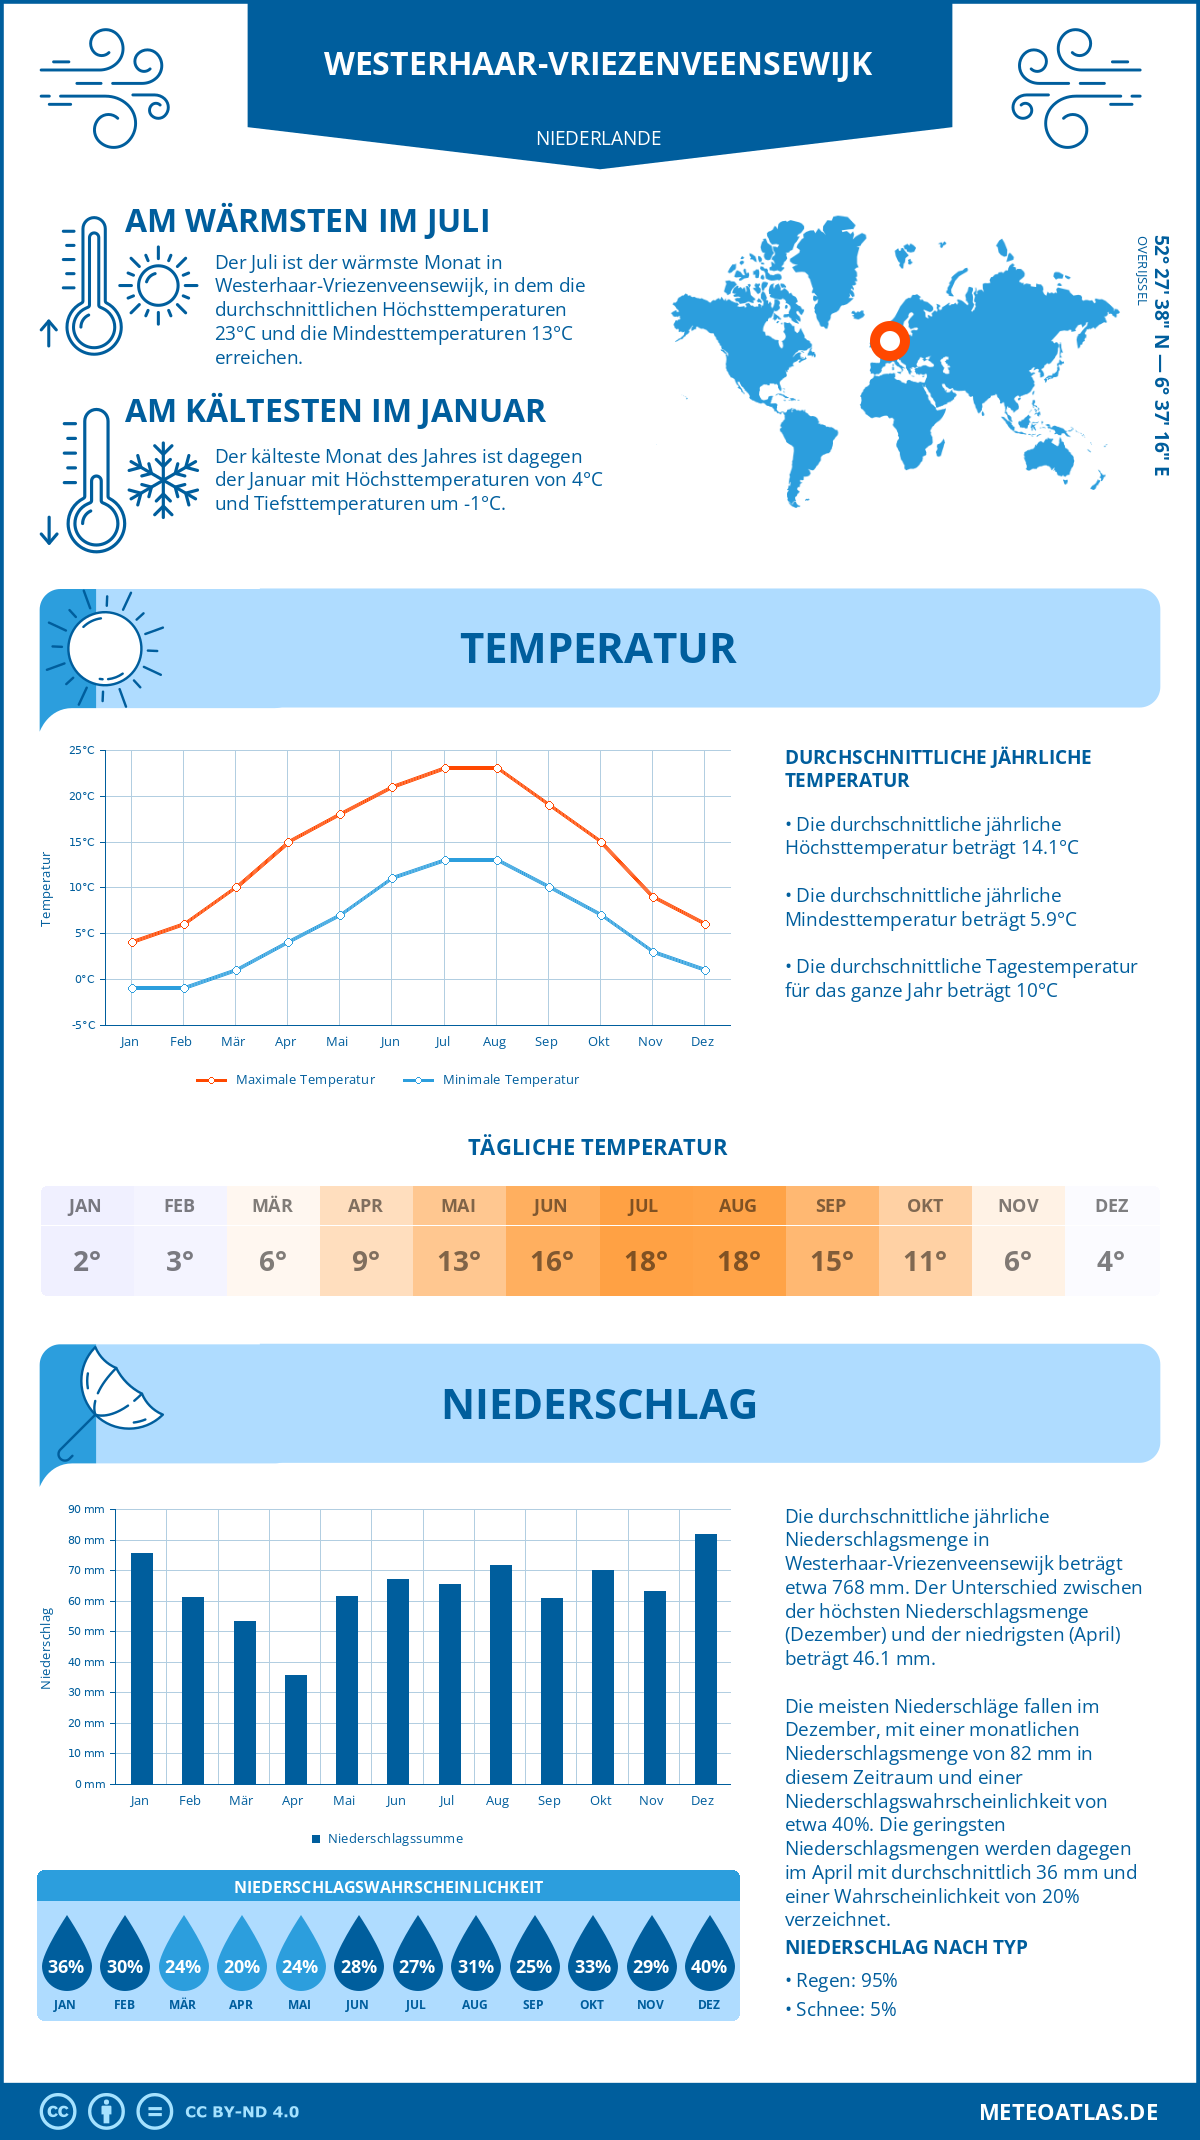 Wetter Westerhaar-Vriezenveensewijk (Niederlande) - Temperatur und Niederschlag